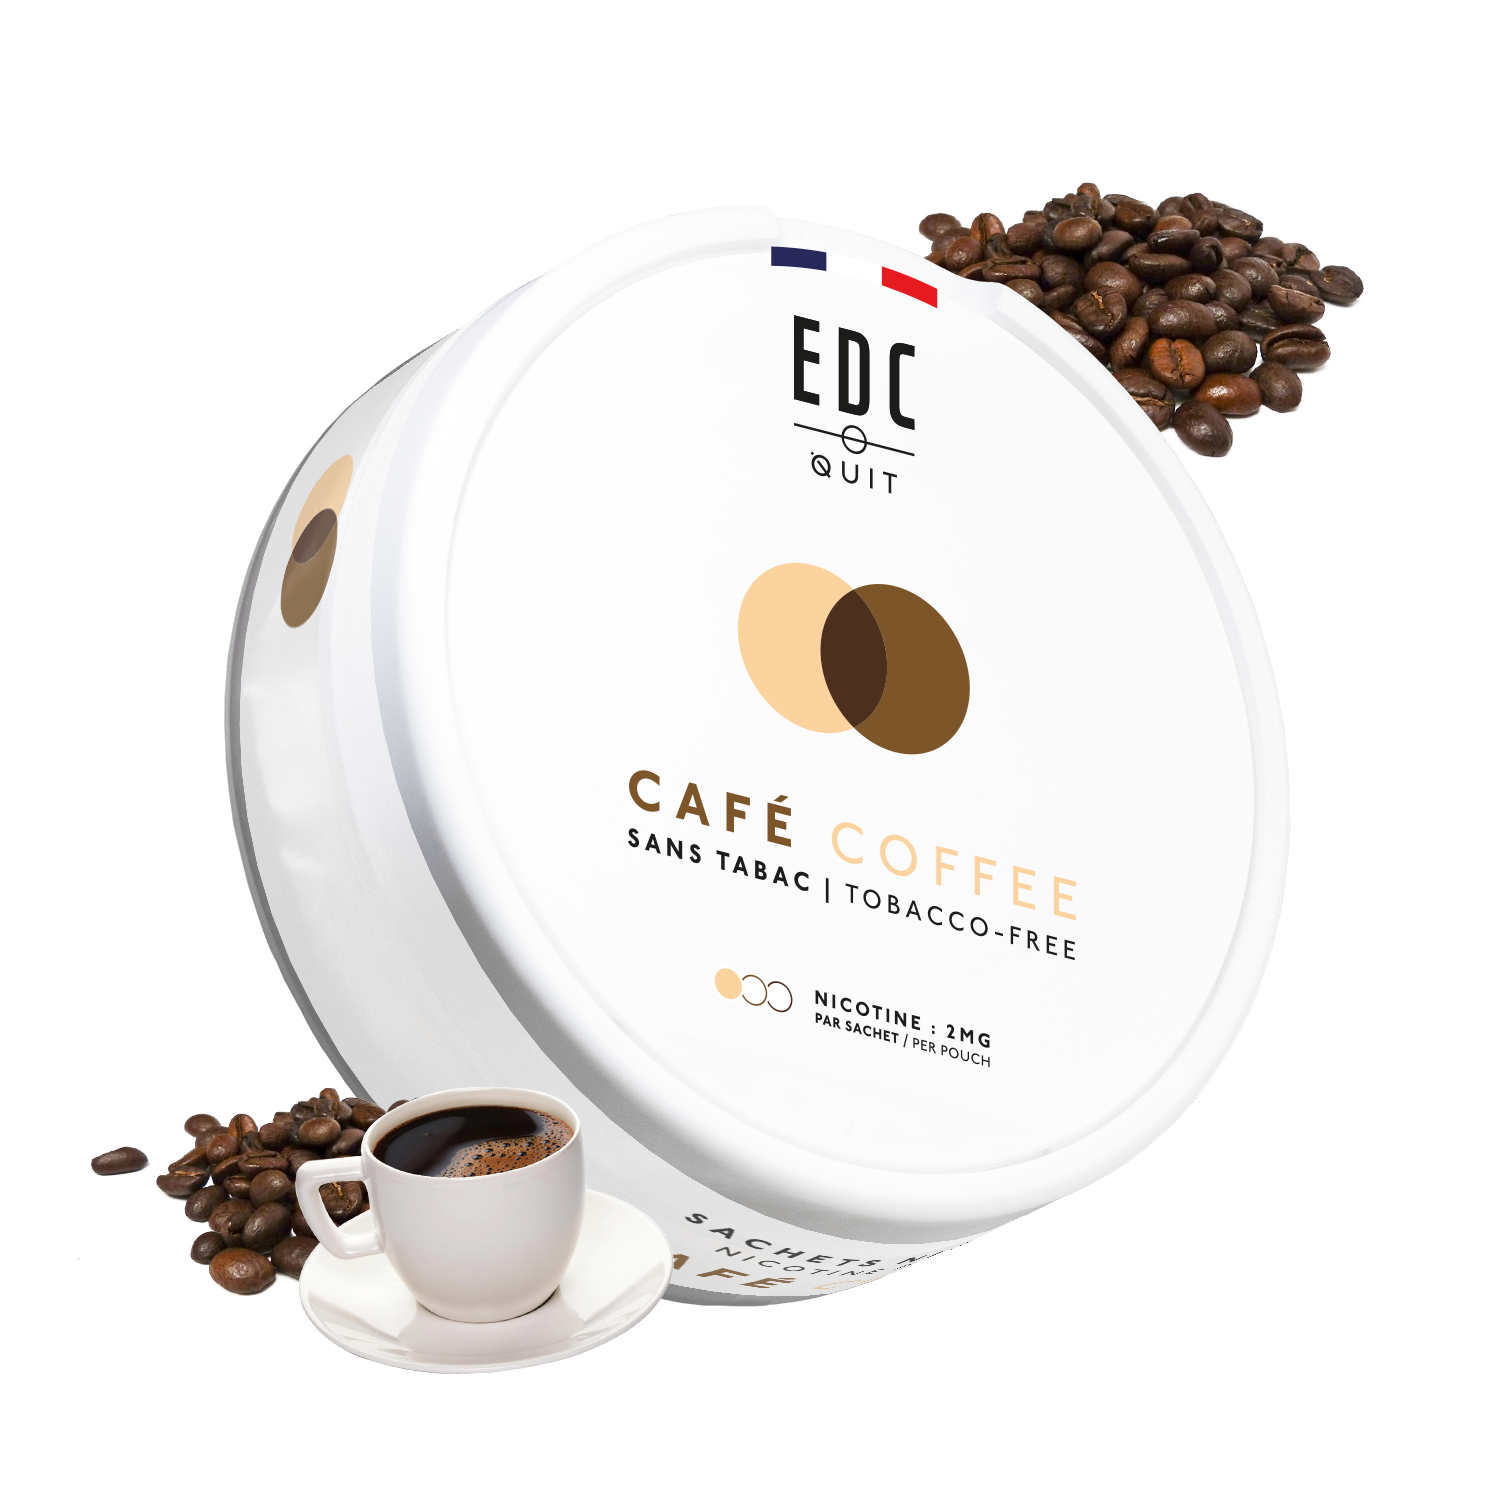 Sachet Nicotiné Café Coffee EDC Quit